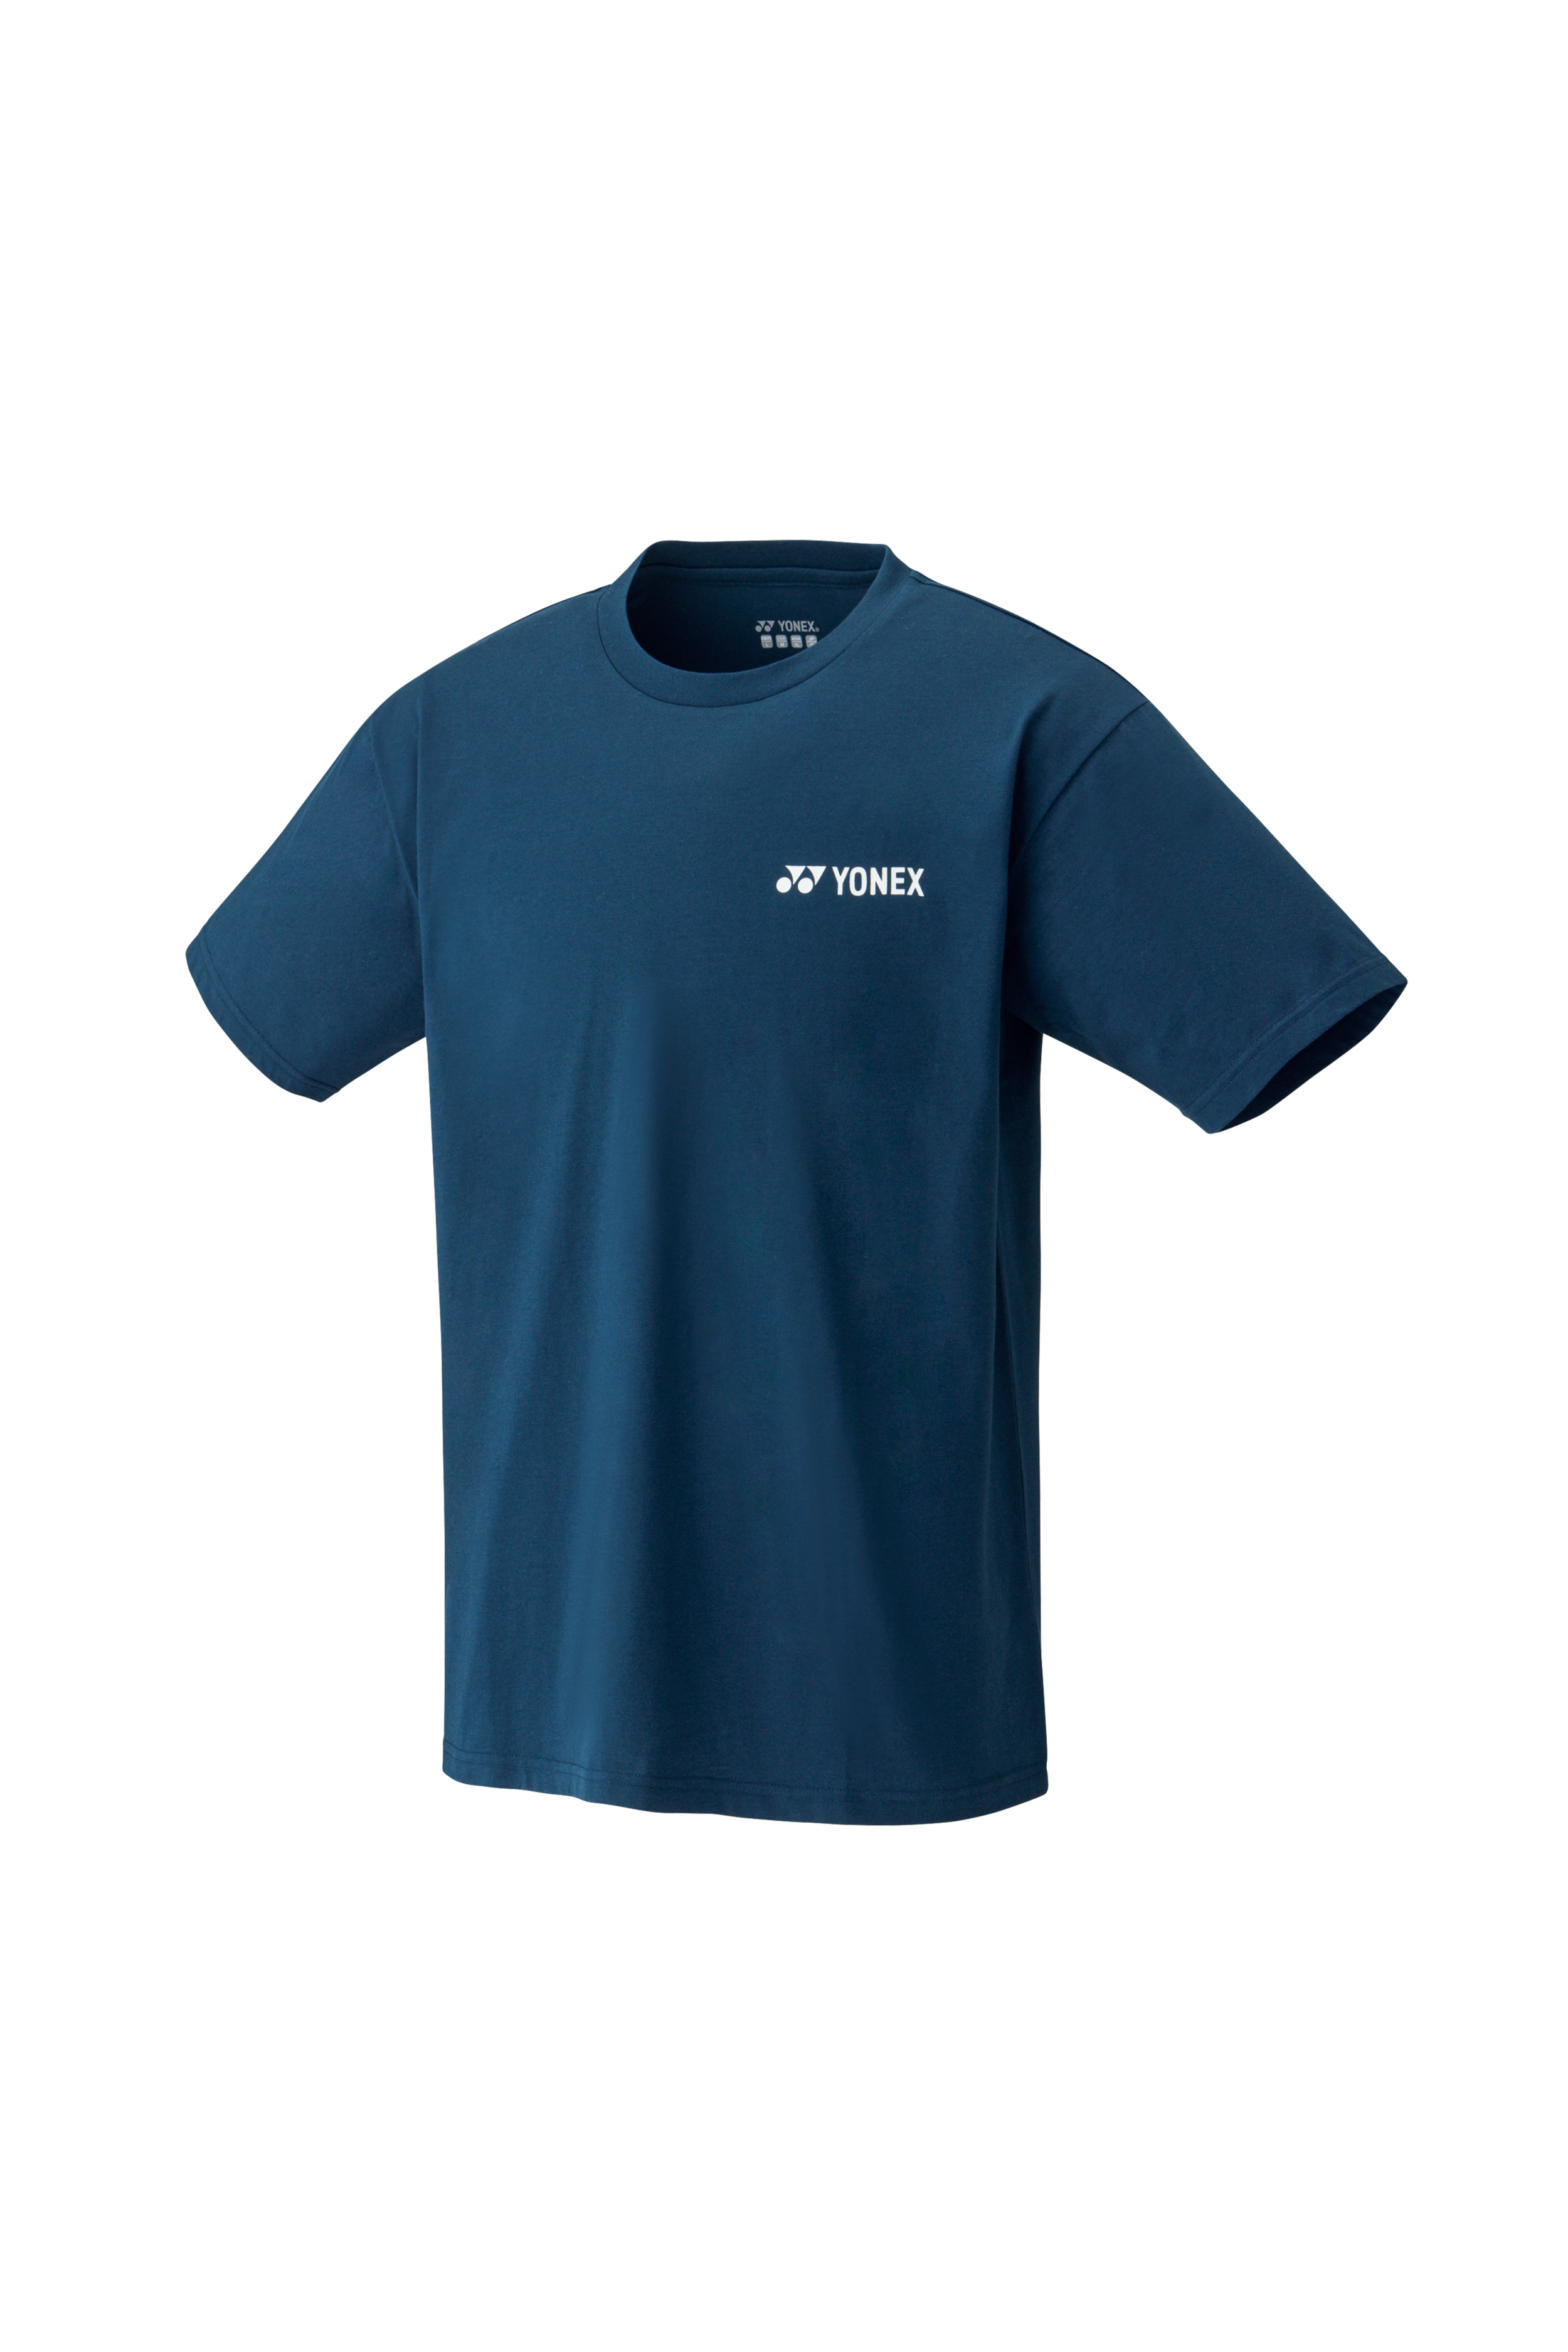 Available in Black or Dark Blue Yonex 16433 Men's T-Shirt 